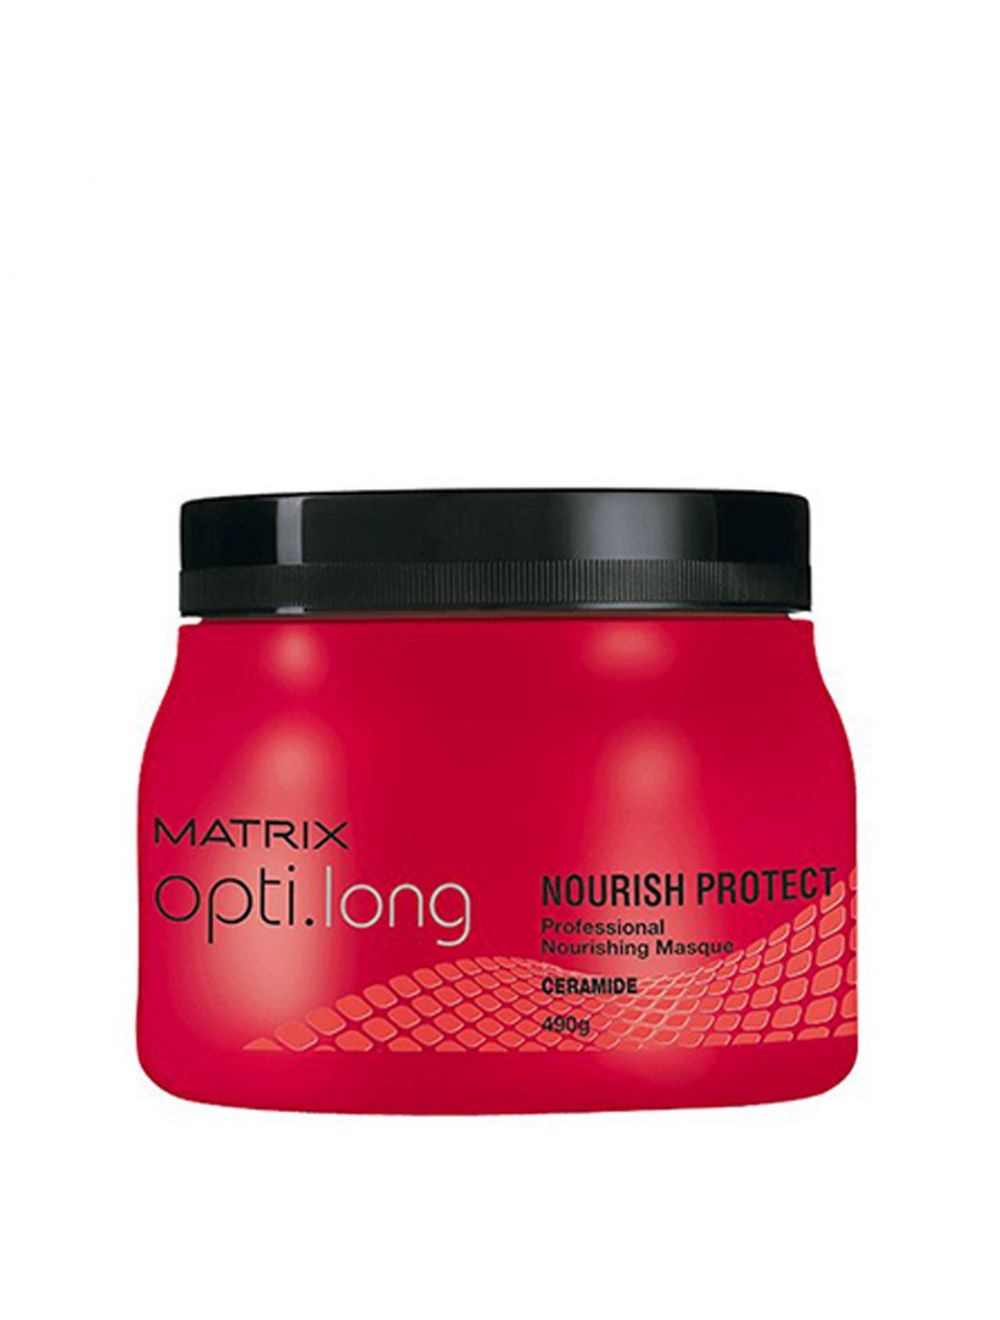 Matrix opti.long Professional Nourishing Masque (490gm)